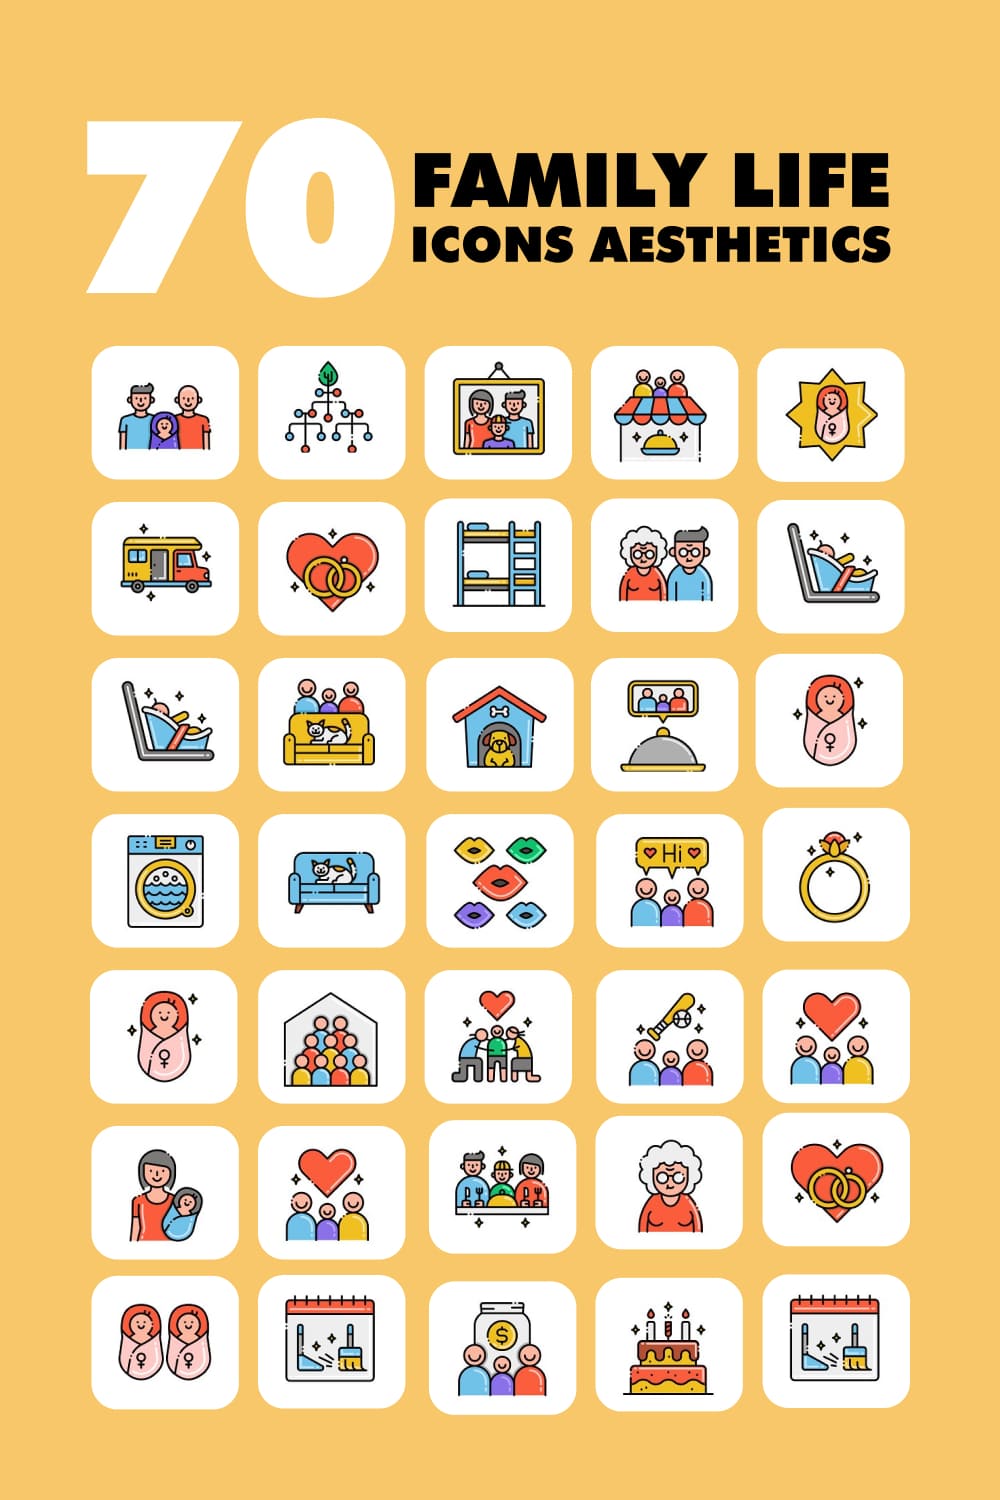 70 Family Life Icons - Aesthetics - Pinterest.